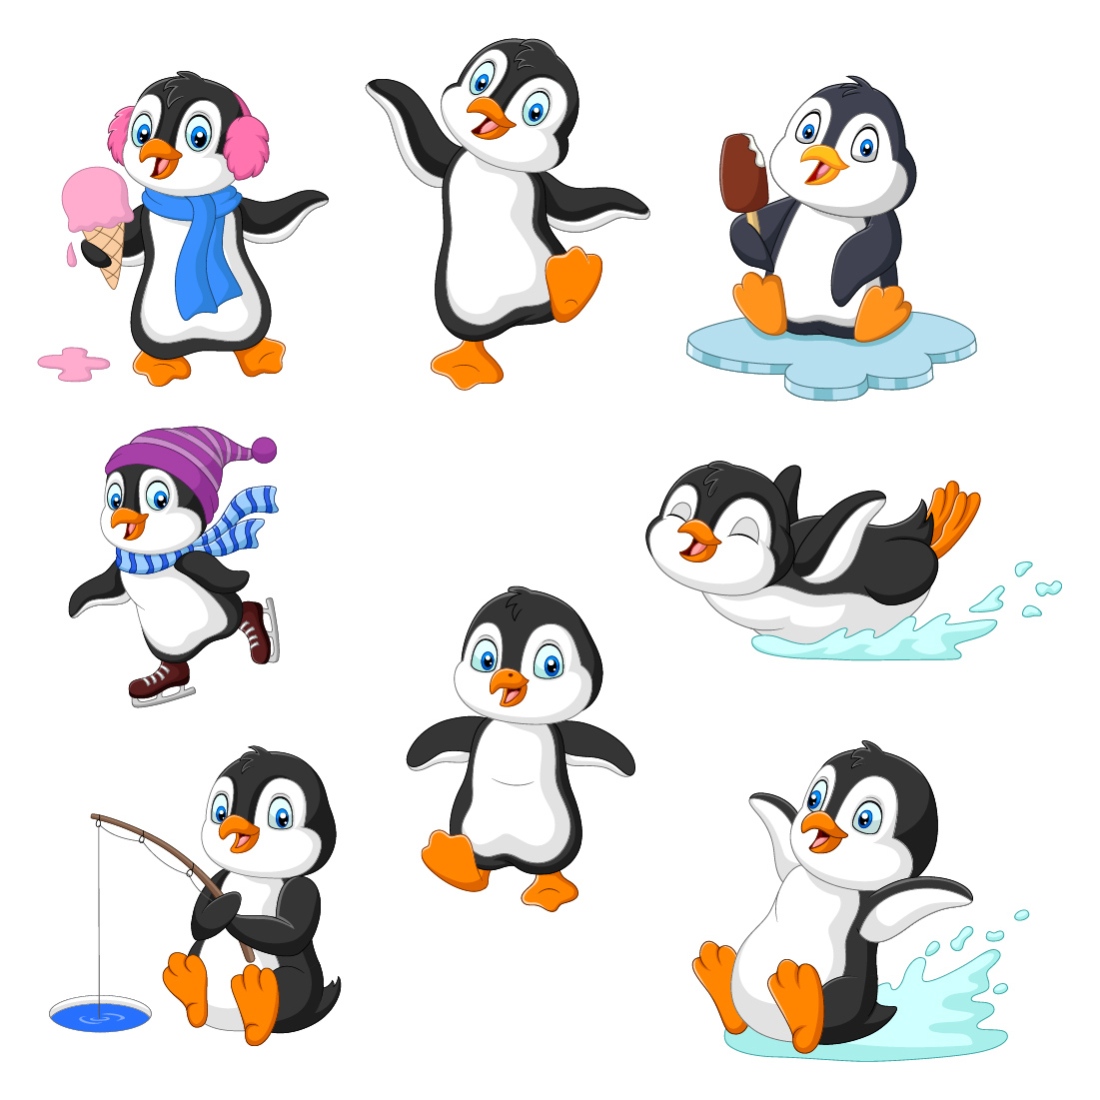 images of cute cartoon penguins